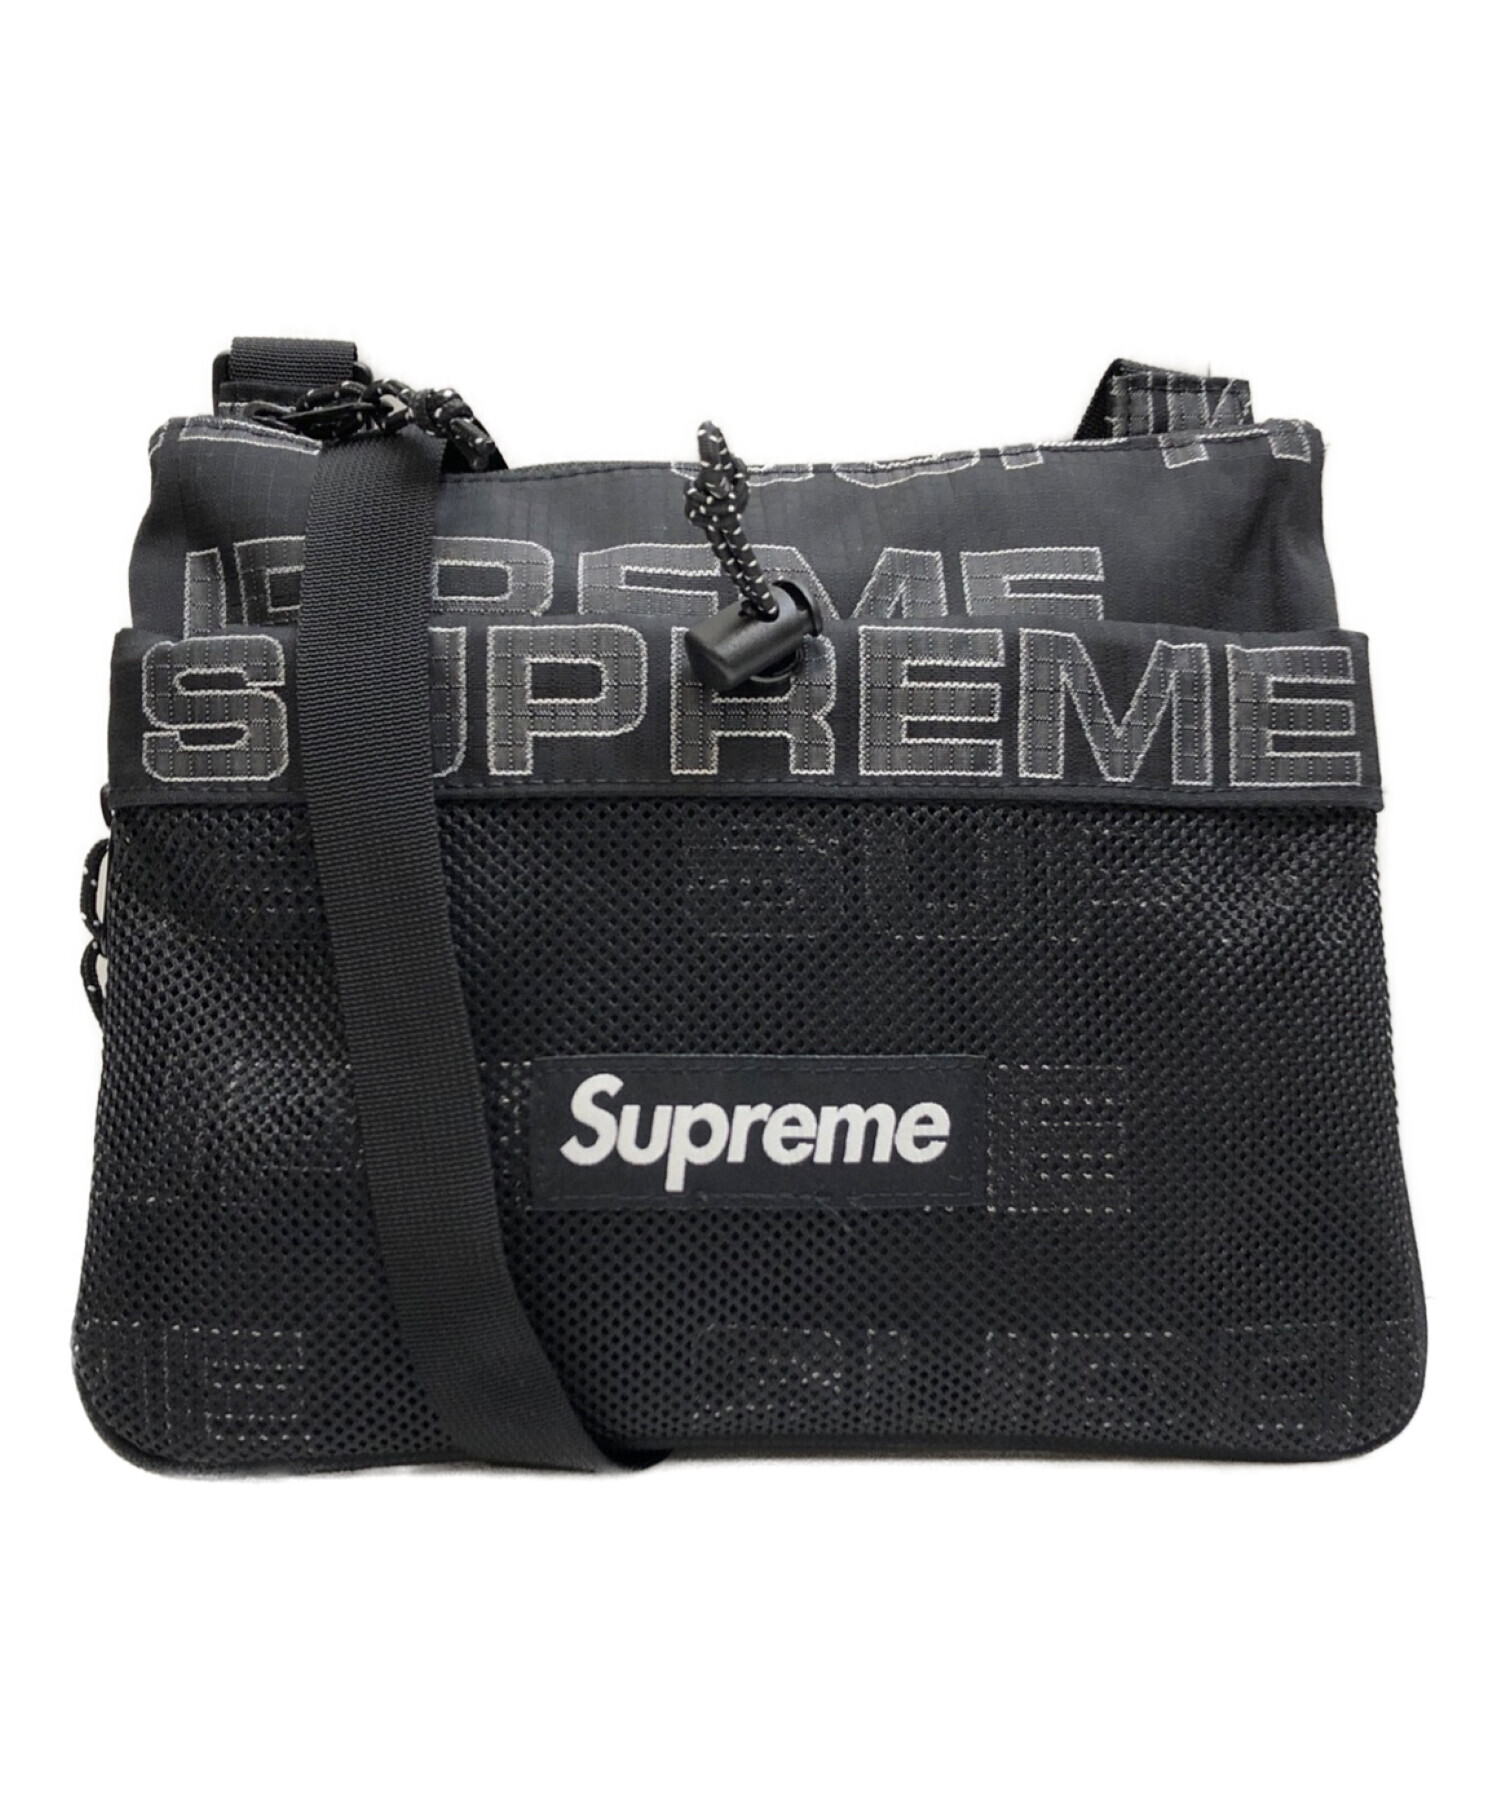 Supreme Side Bag 21aw ブラック - ショルダーバッグ